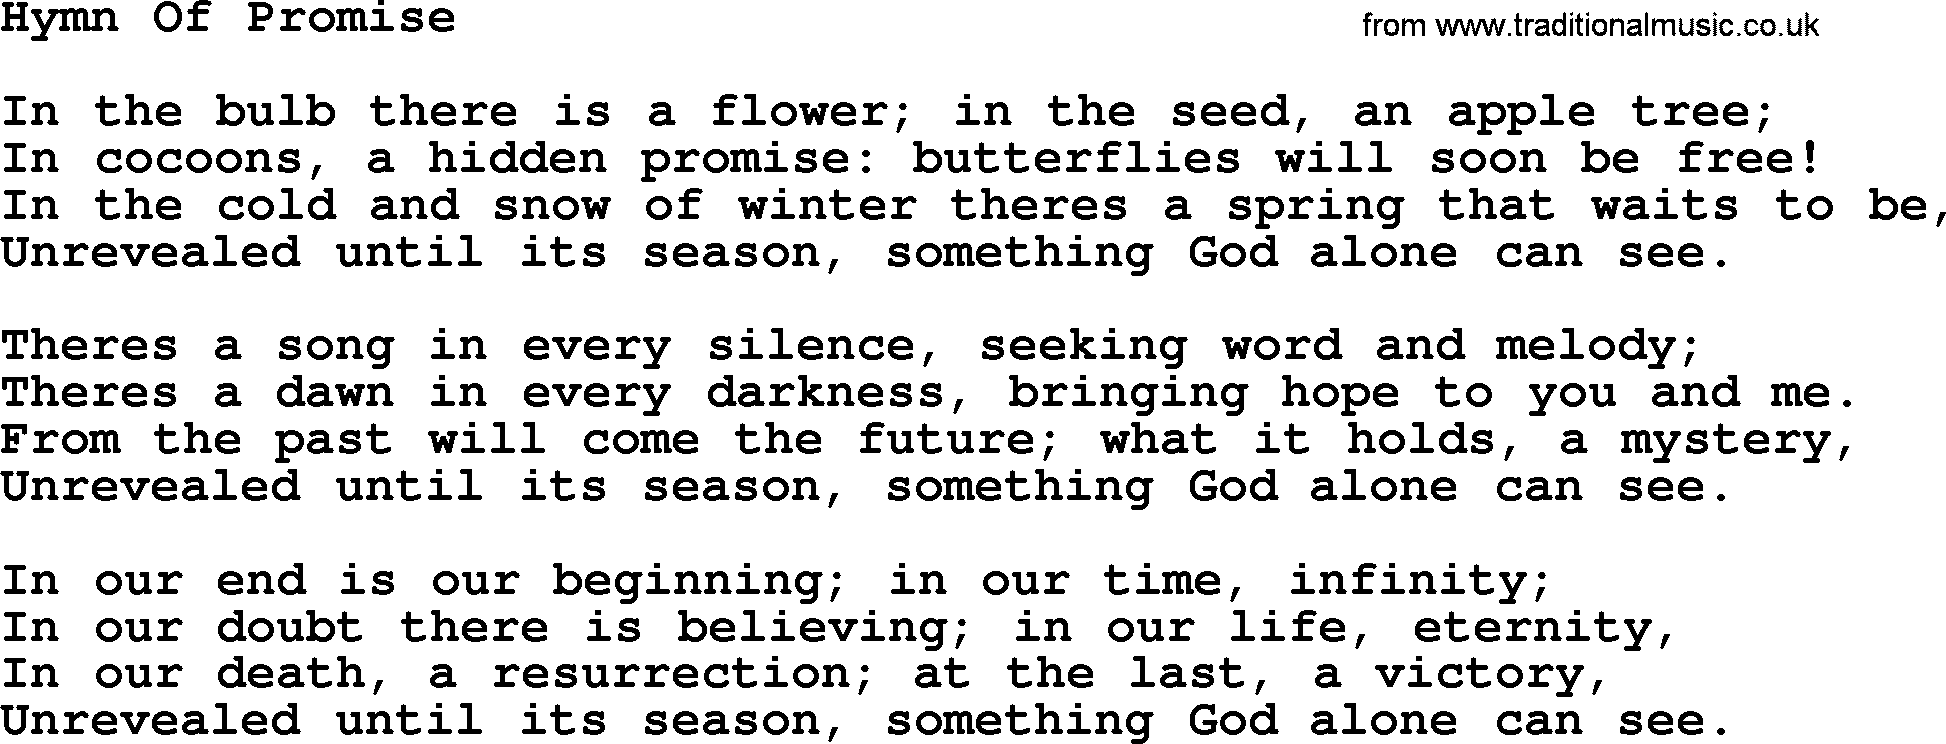 Funeral Hymn: Hymn Of Promise, lyrics, and PDF